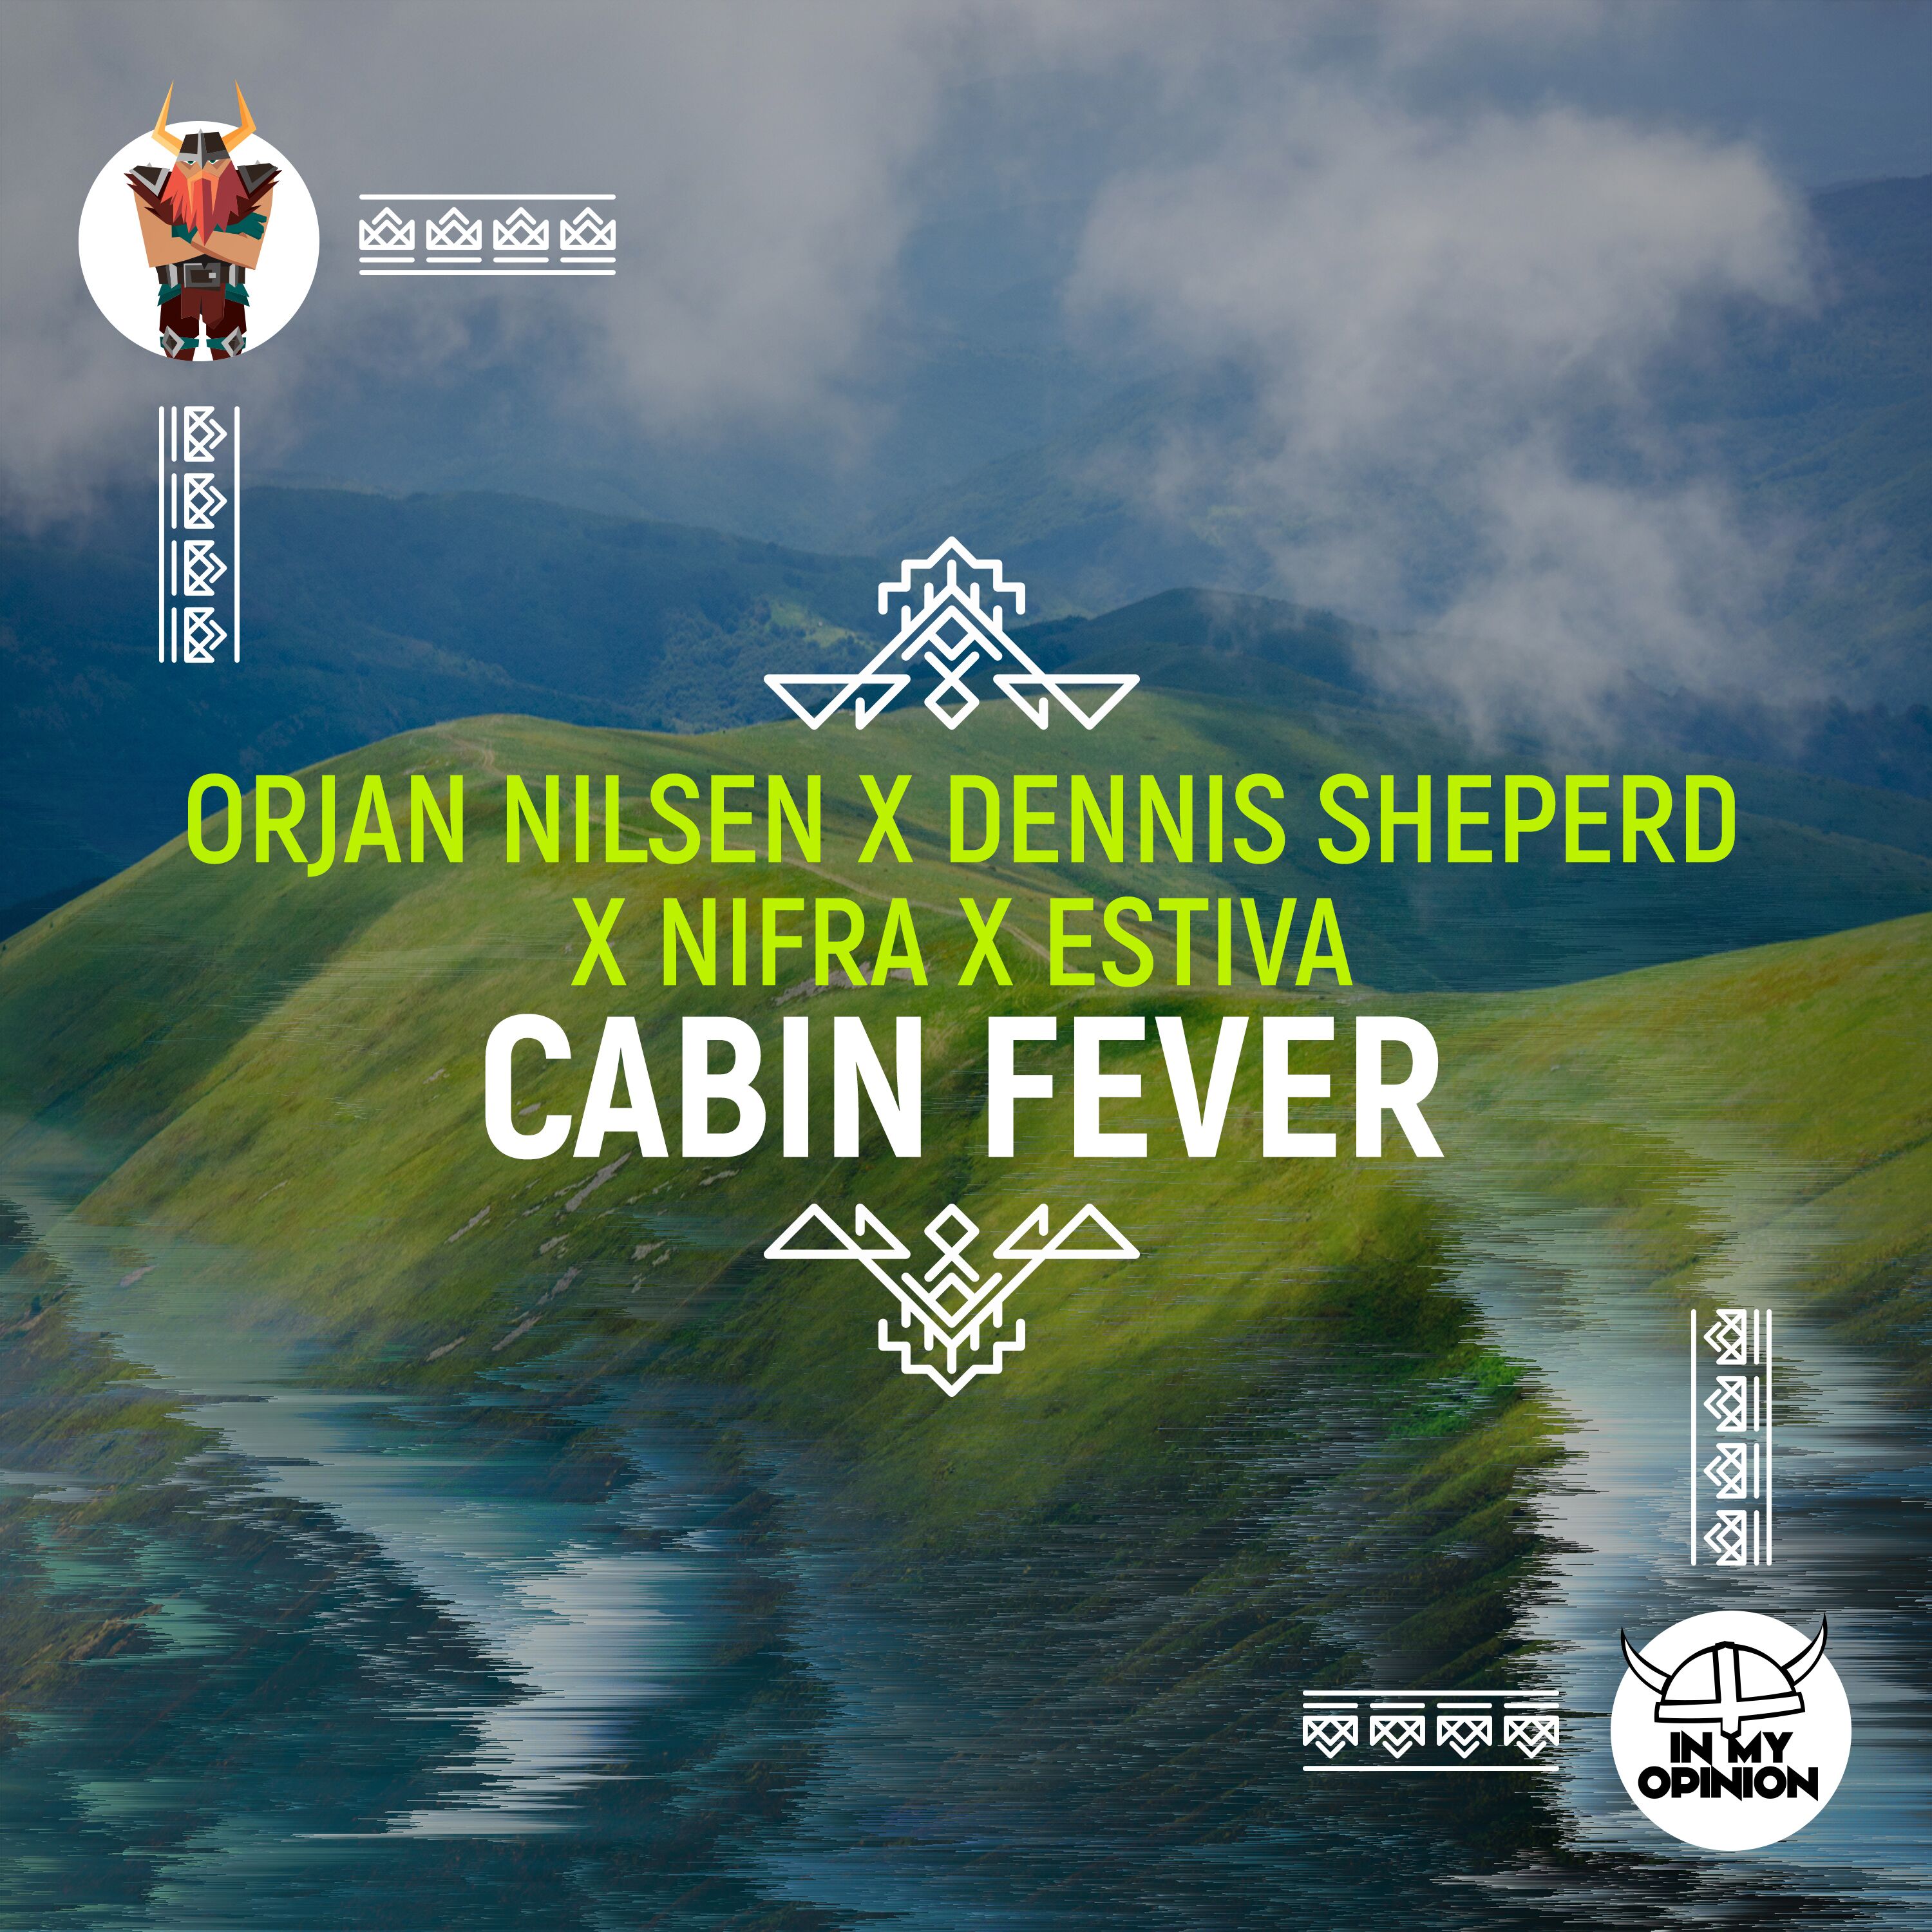 Ørjan Nilsen x Dennis Sheperd x Nifra x Estiva presents Cabin Fever on Armada Music